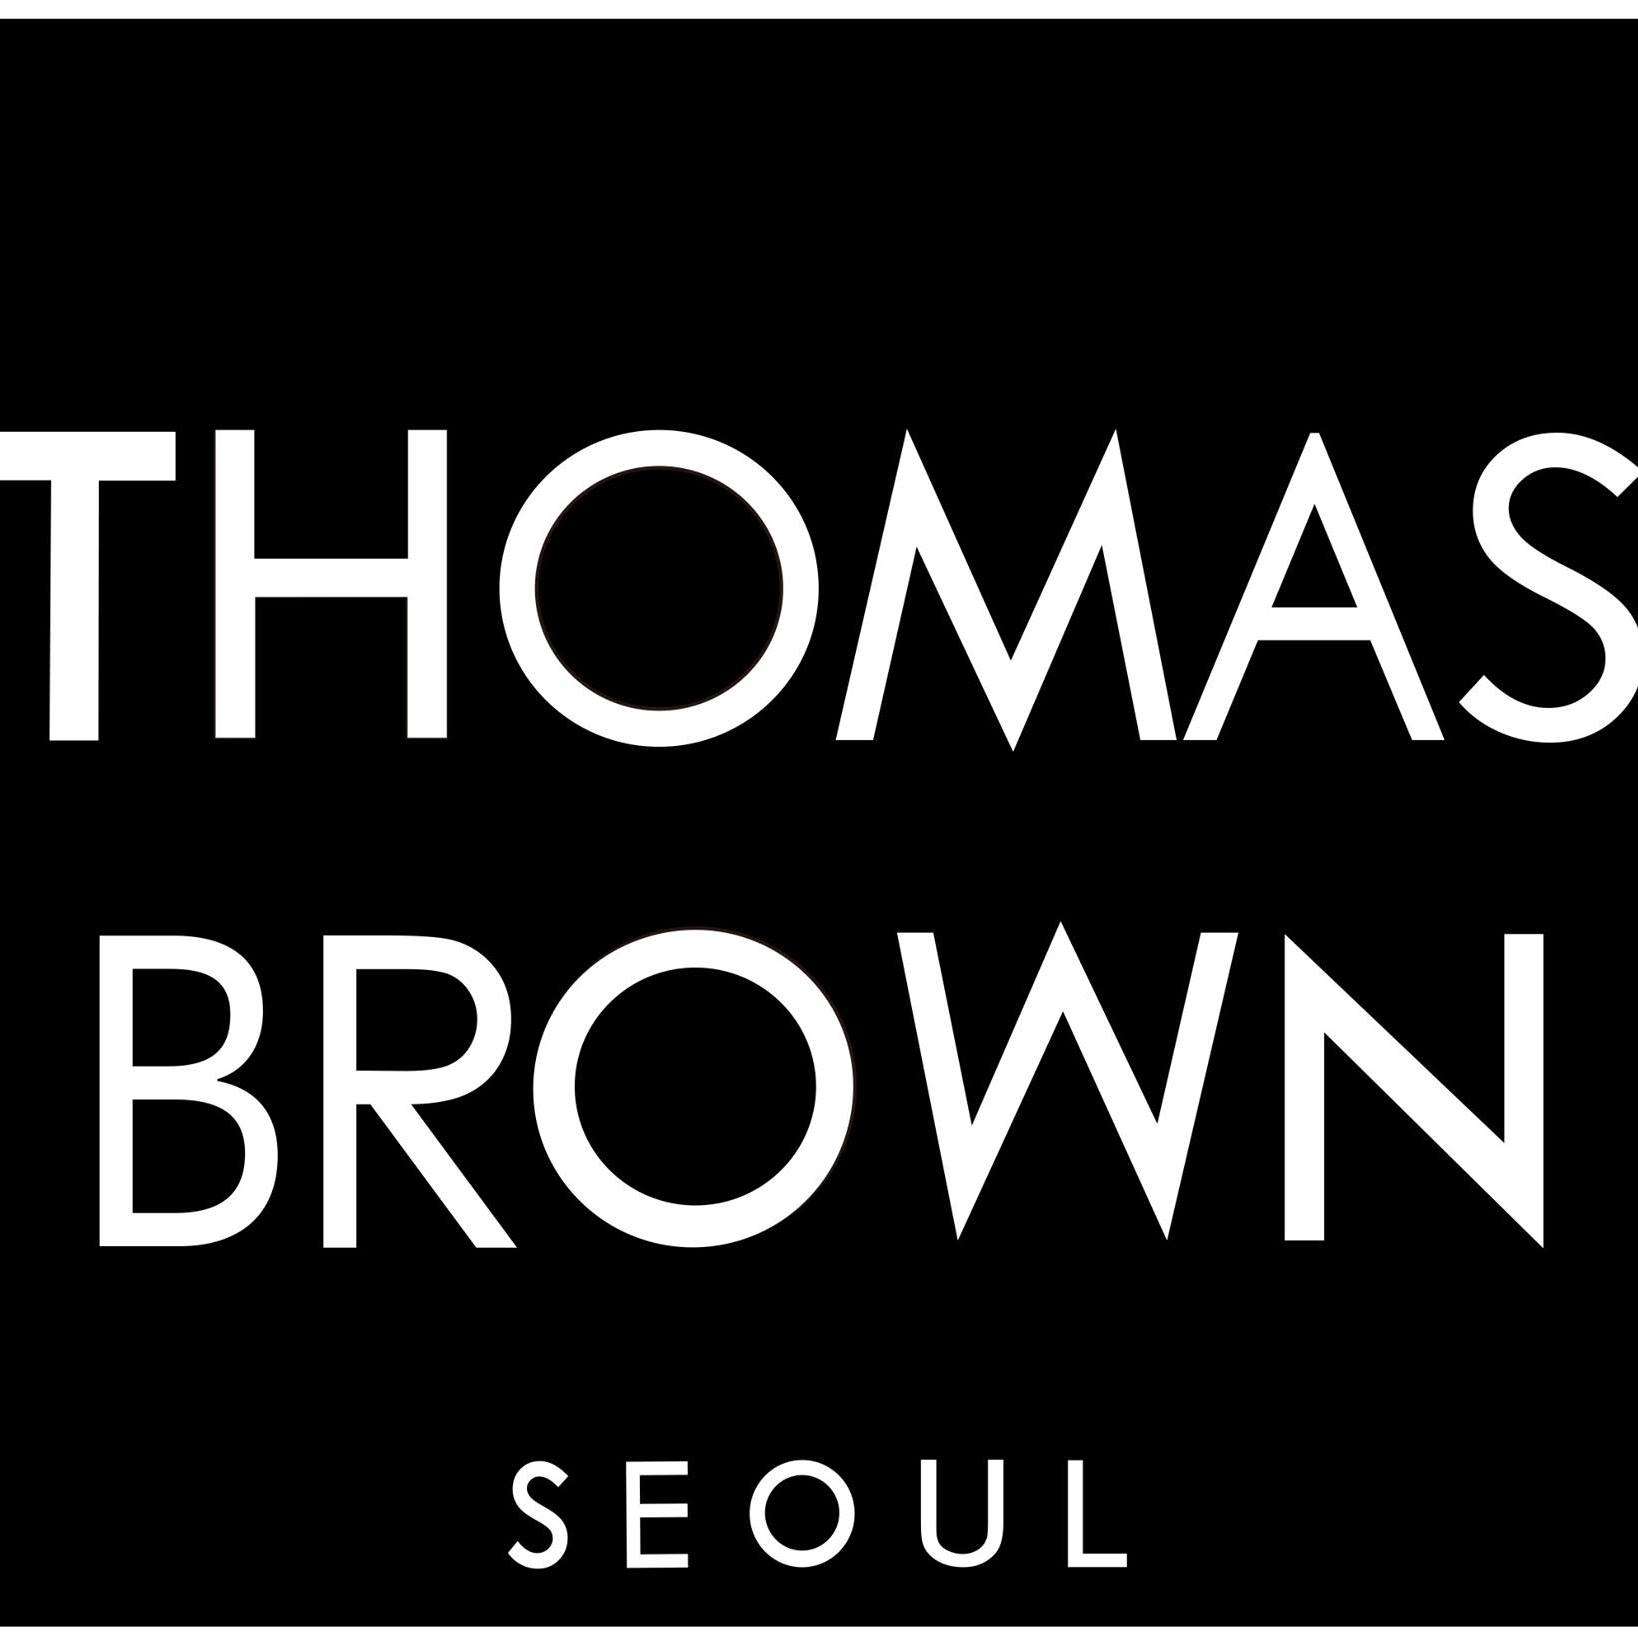 Brown Thomas - Crunchbase Company Profile & Funding